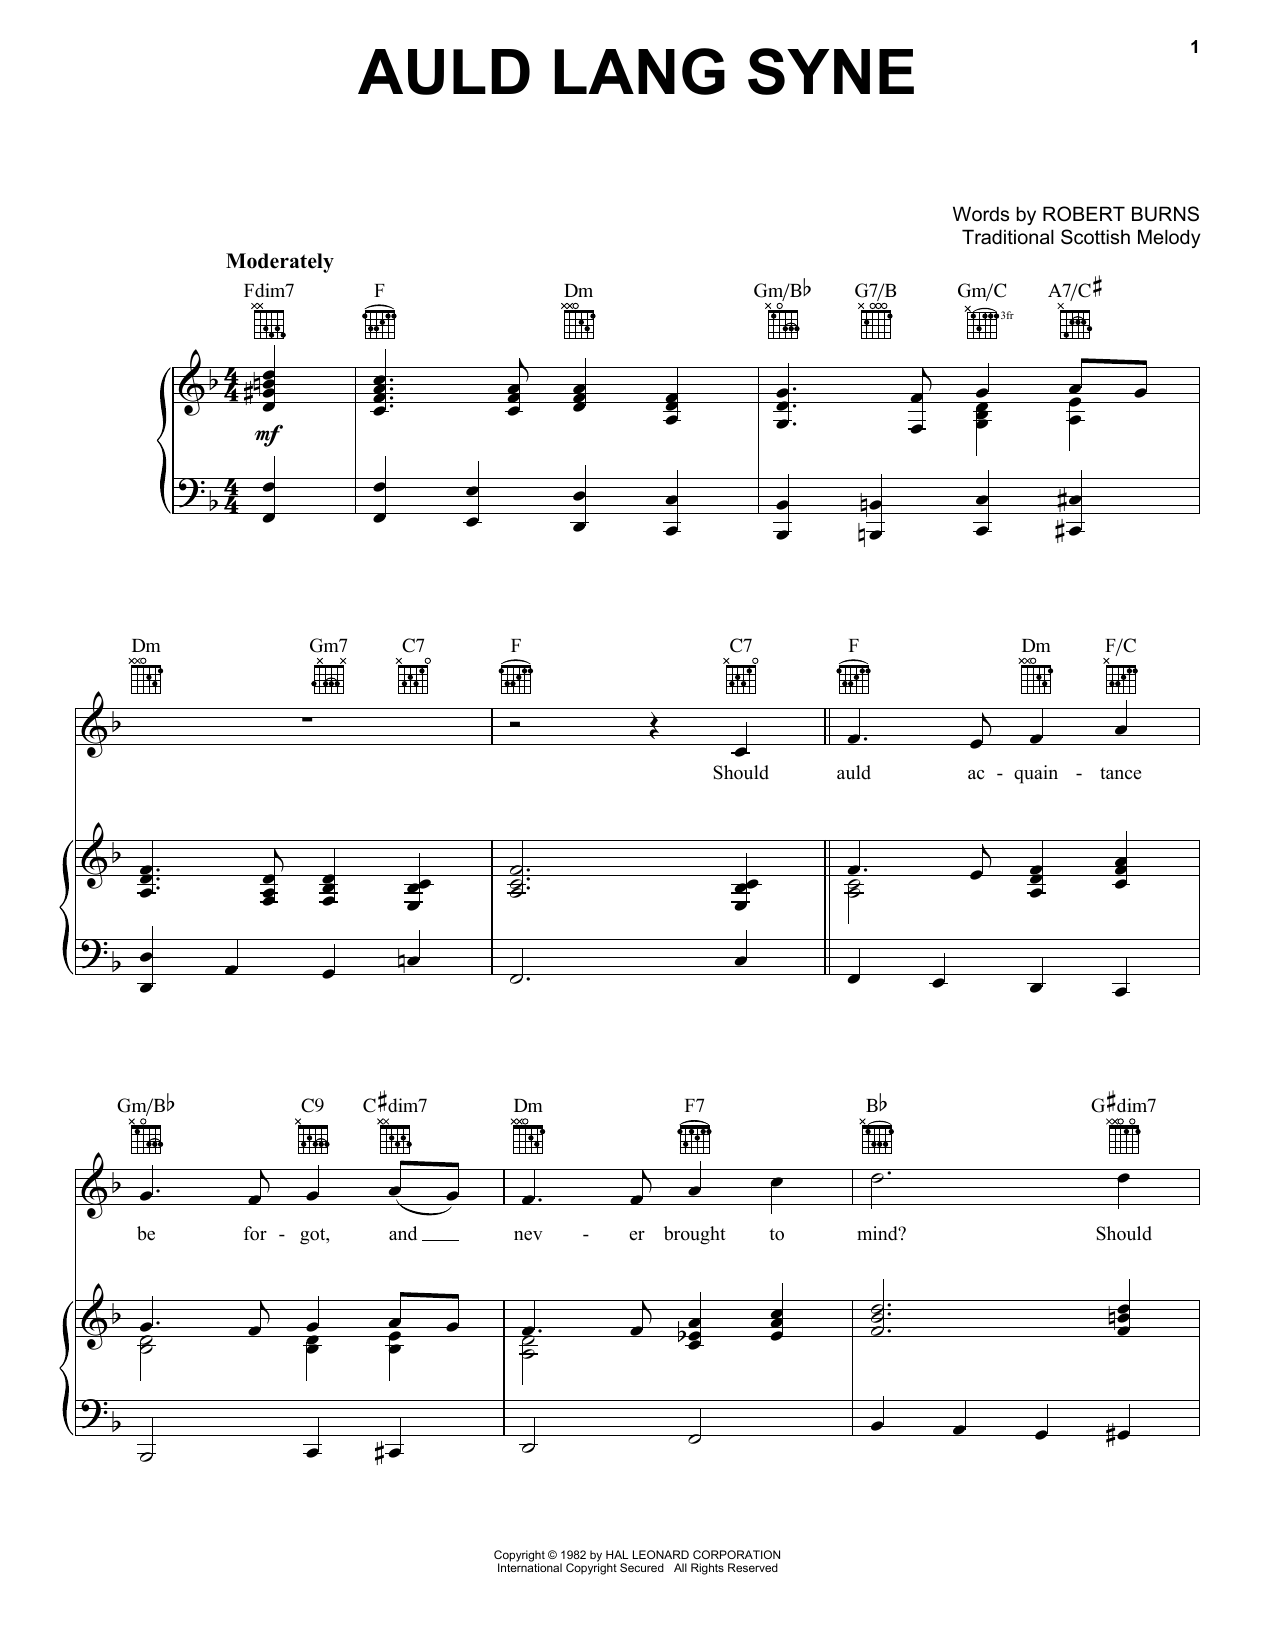 Traditional Auld Lang Syne sheet music notes printable PDF score